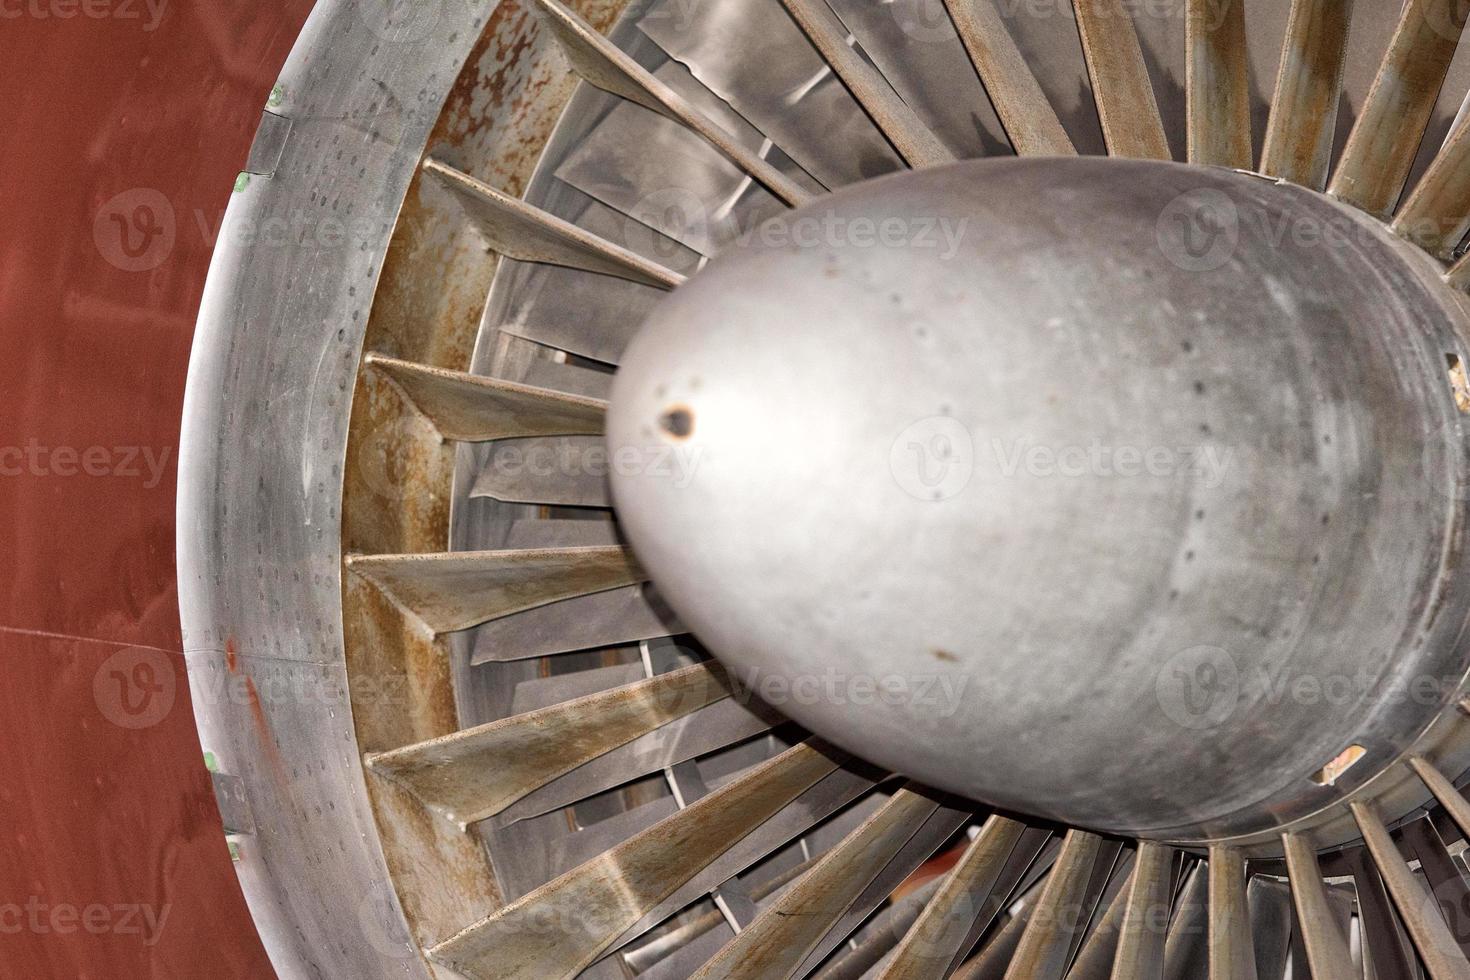 Jet vliegtuig turbine motor dichtbij omhoog foto